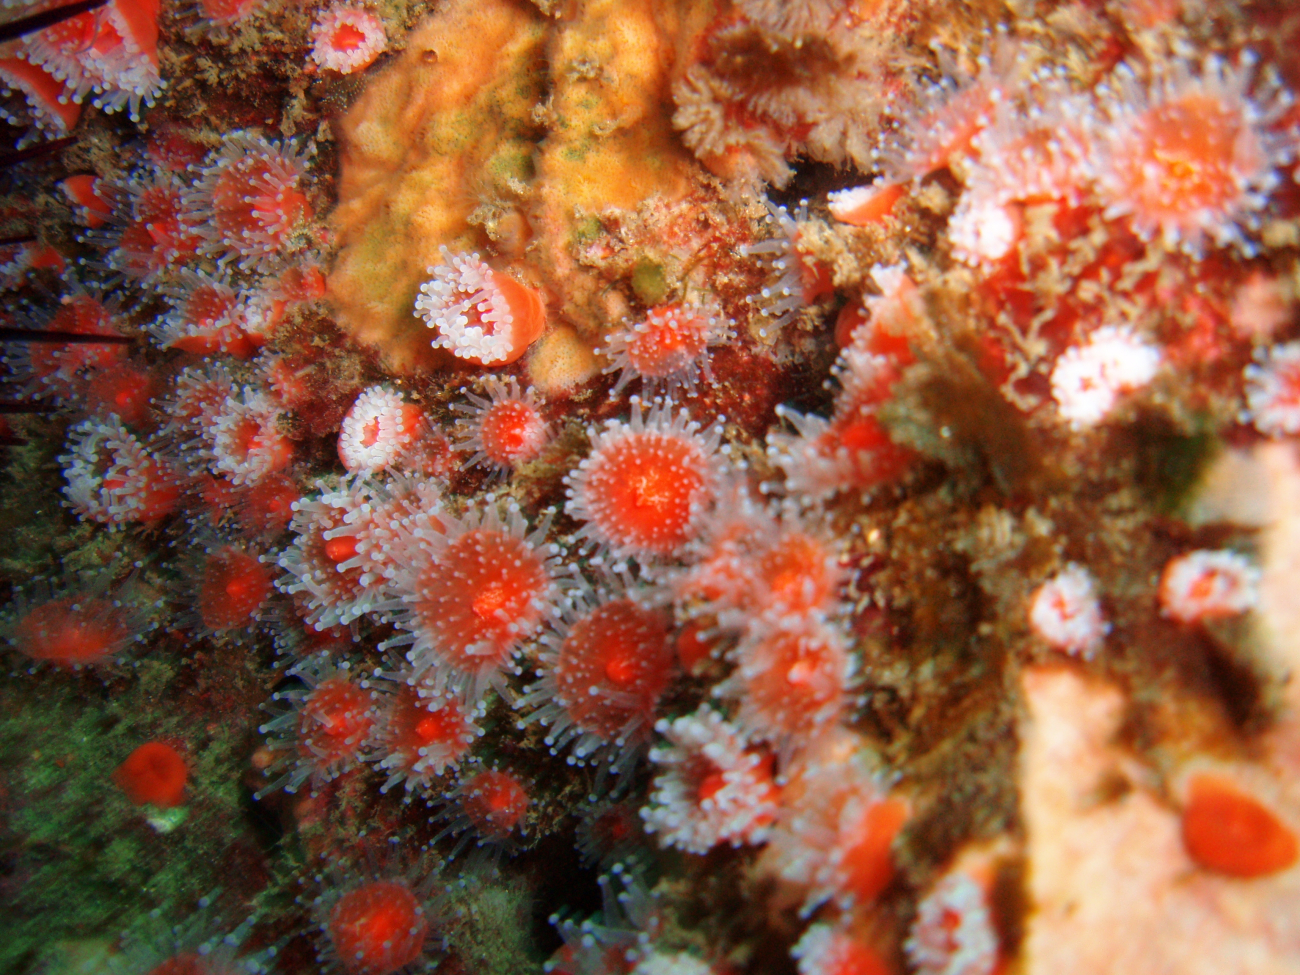 Strawberry anemone (Corynactis californica)